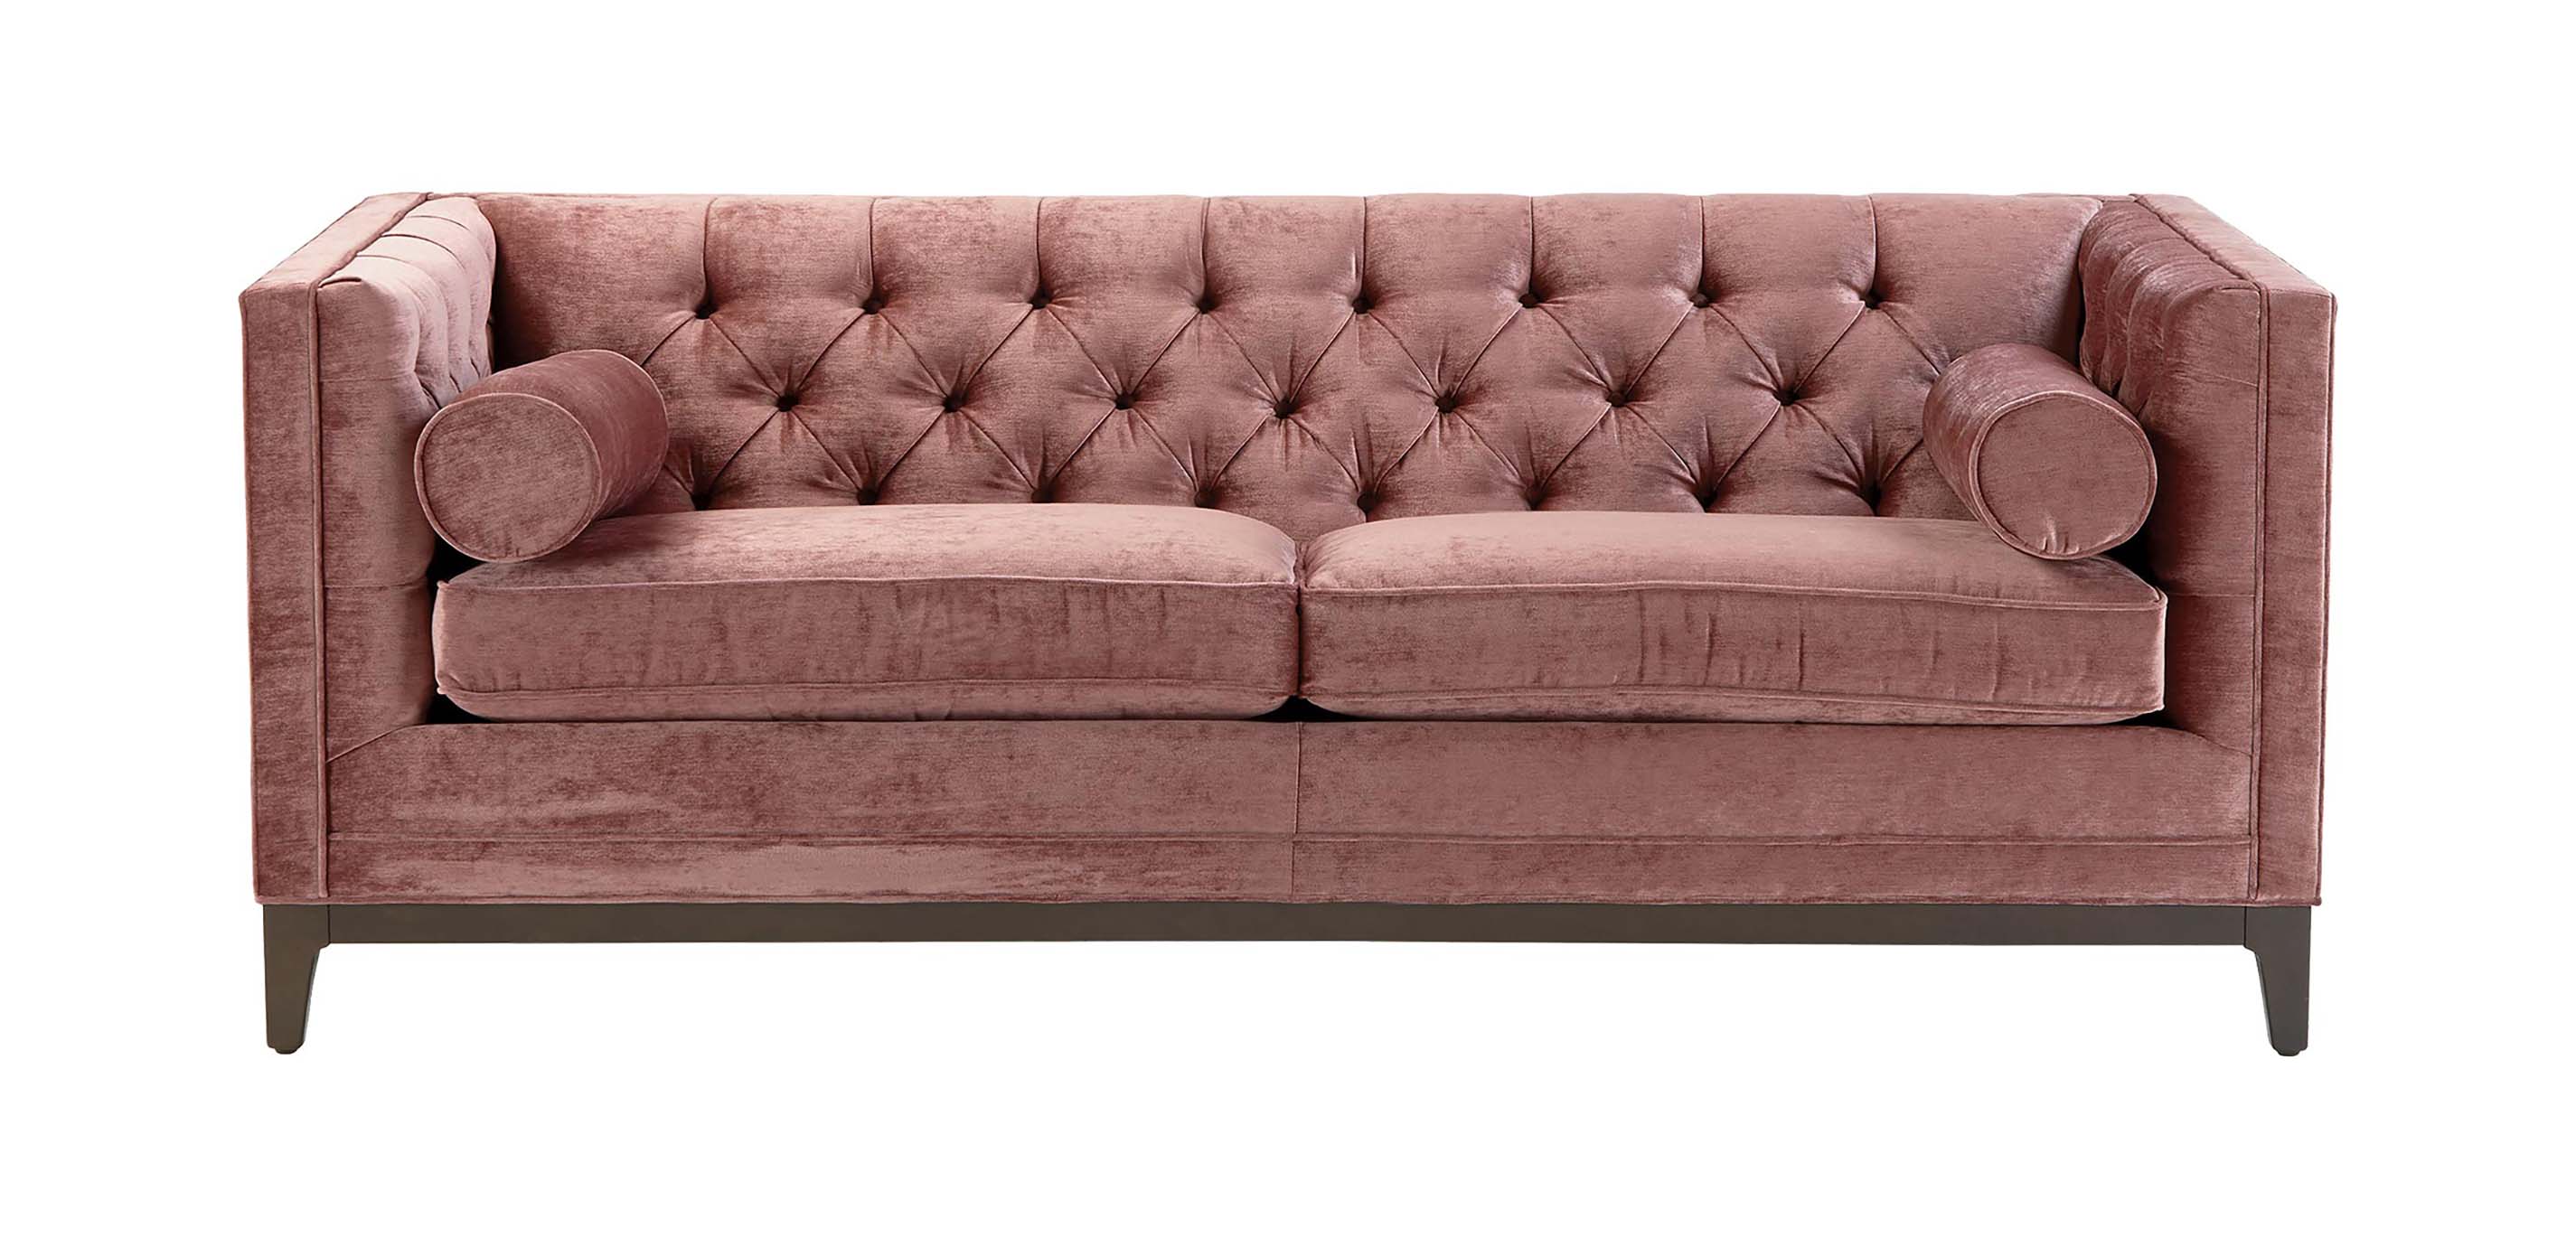 ethan allen hudson leather sofa